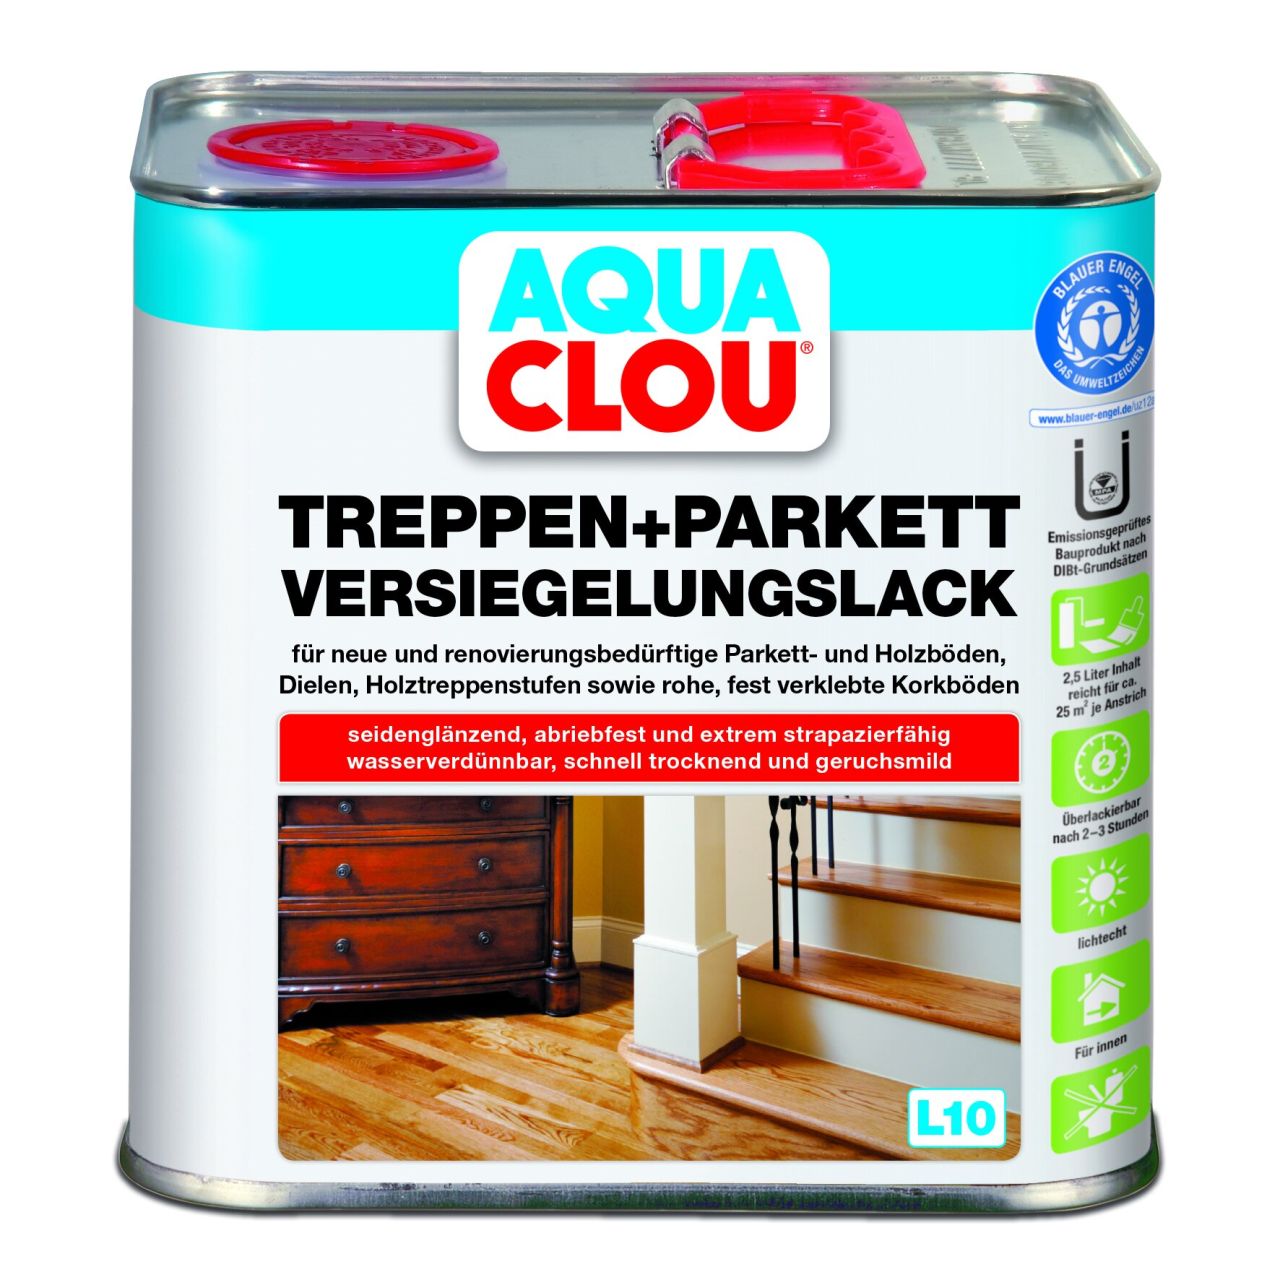 Aqua Clou Versiegelungslack 2,5 L für Treppen und Parkett von Aqua Clou